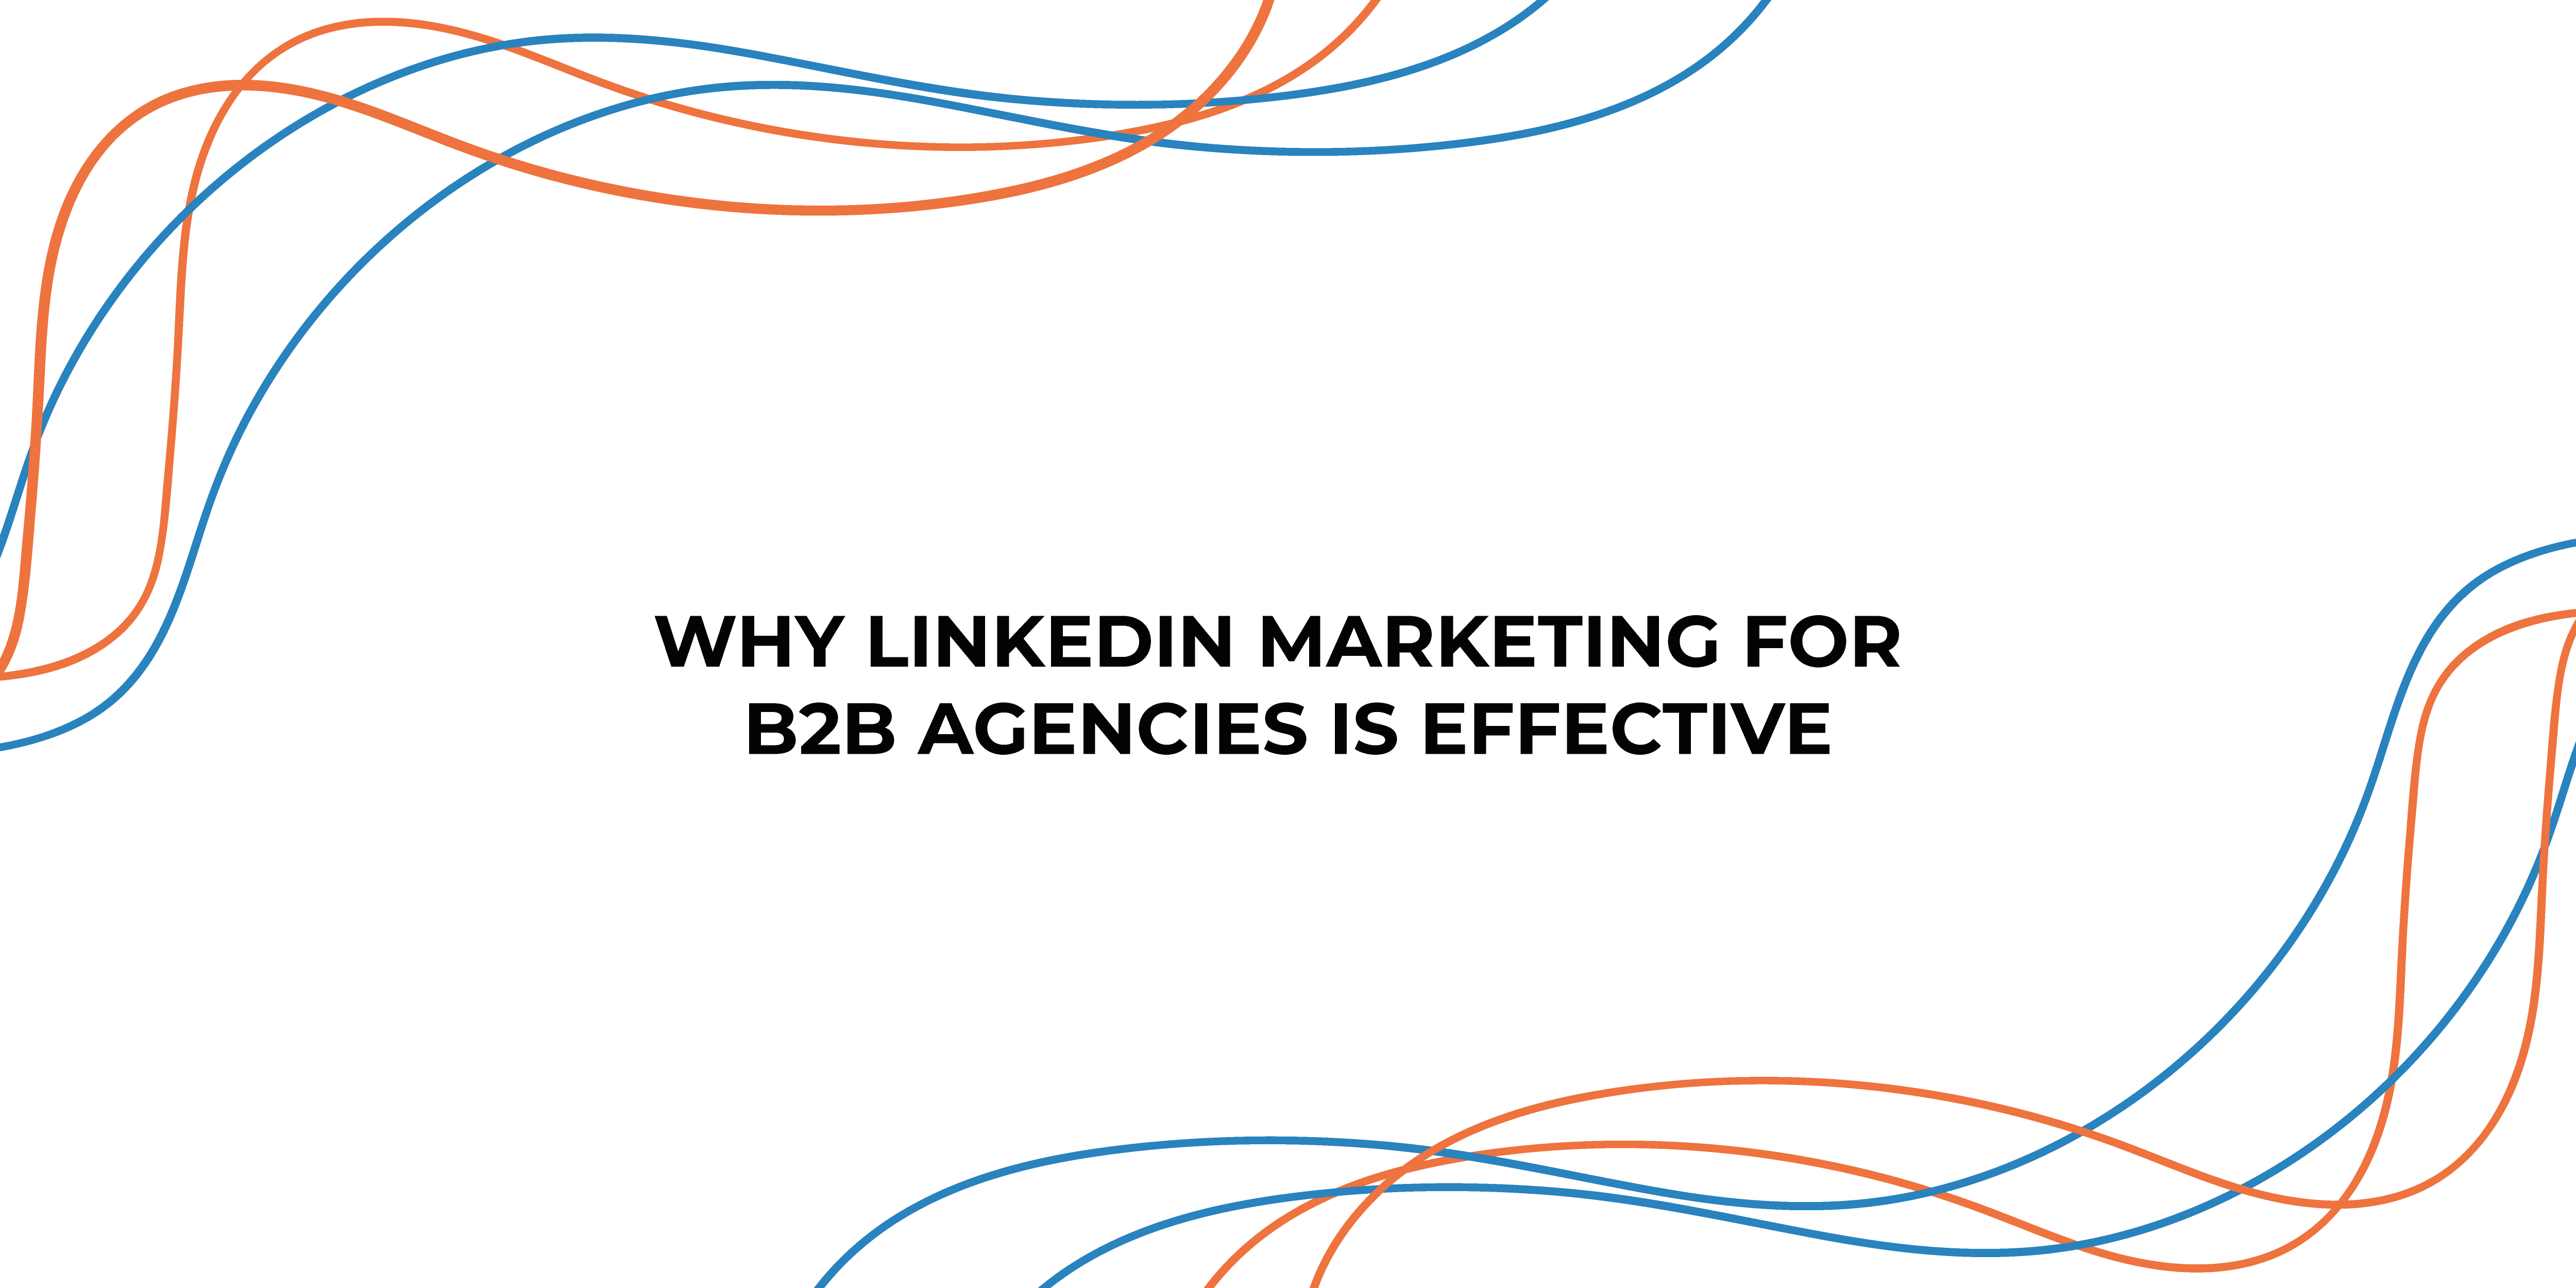 Why LinkedIn Marketing for B2B Agencies is Effective